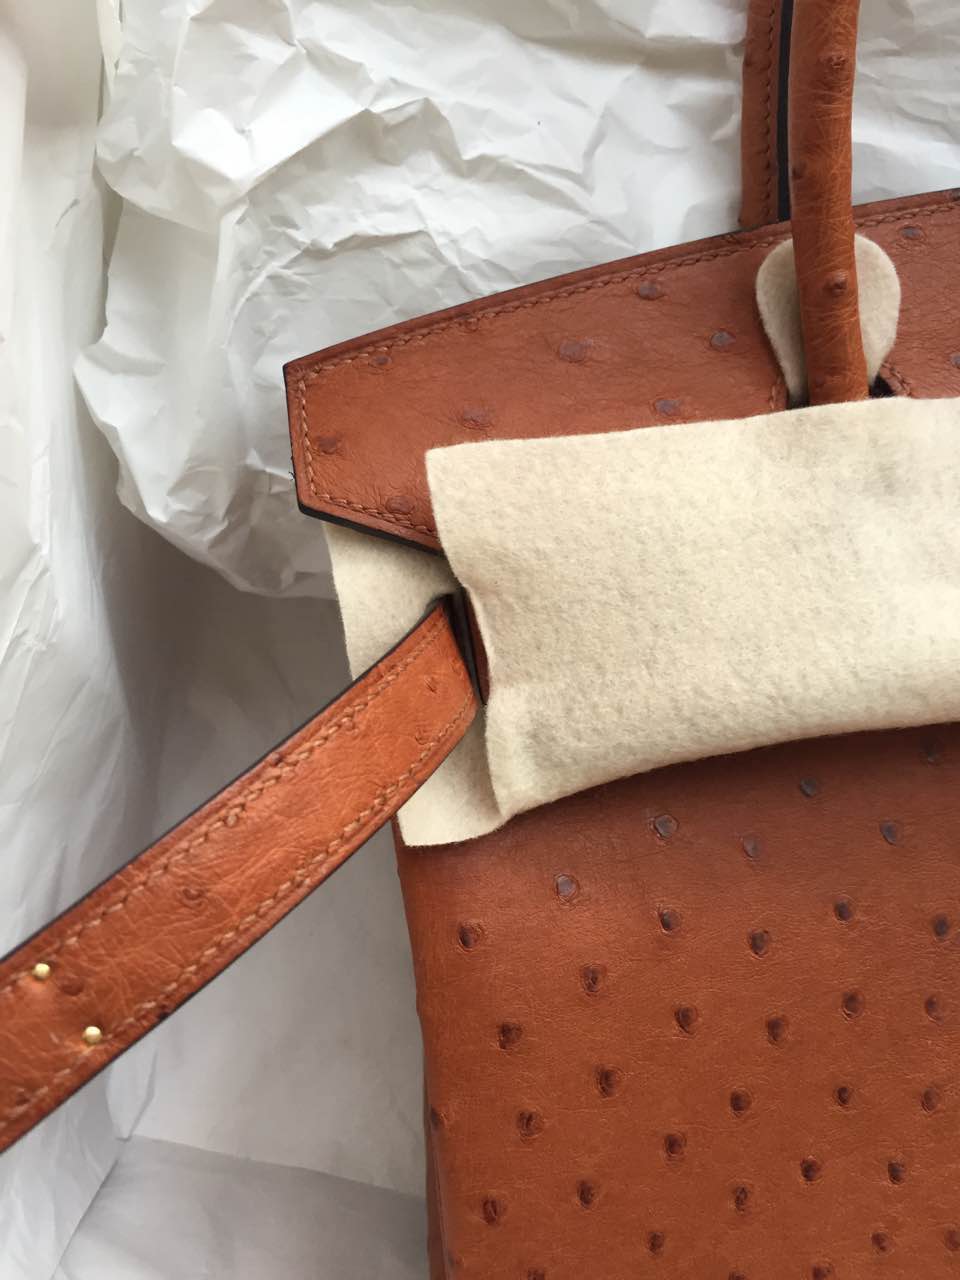 Wholesale Hermes Birkin30cm C37 Light Coffee Ostrich Leather Women&#8217;s Tote Bag